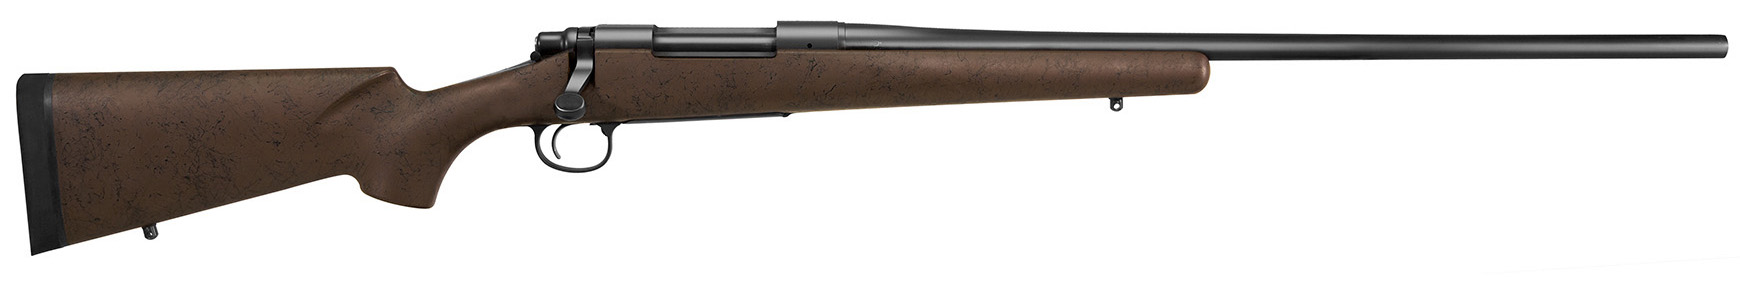 Model 700 AWR (Alaskan Wilderness Rifle)